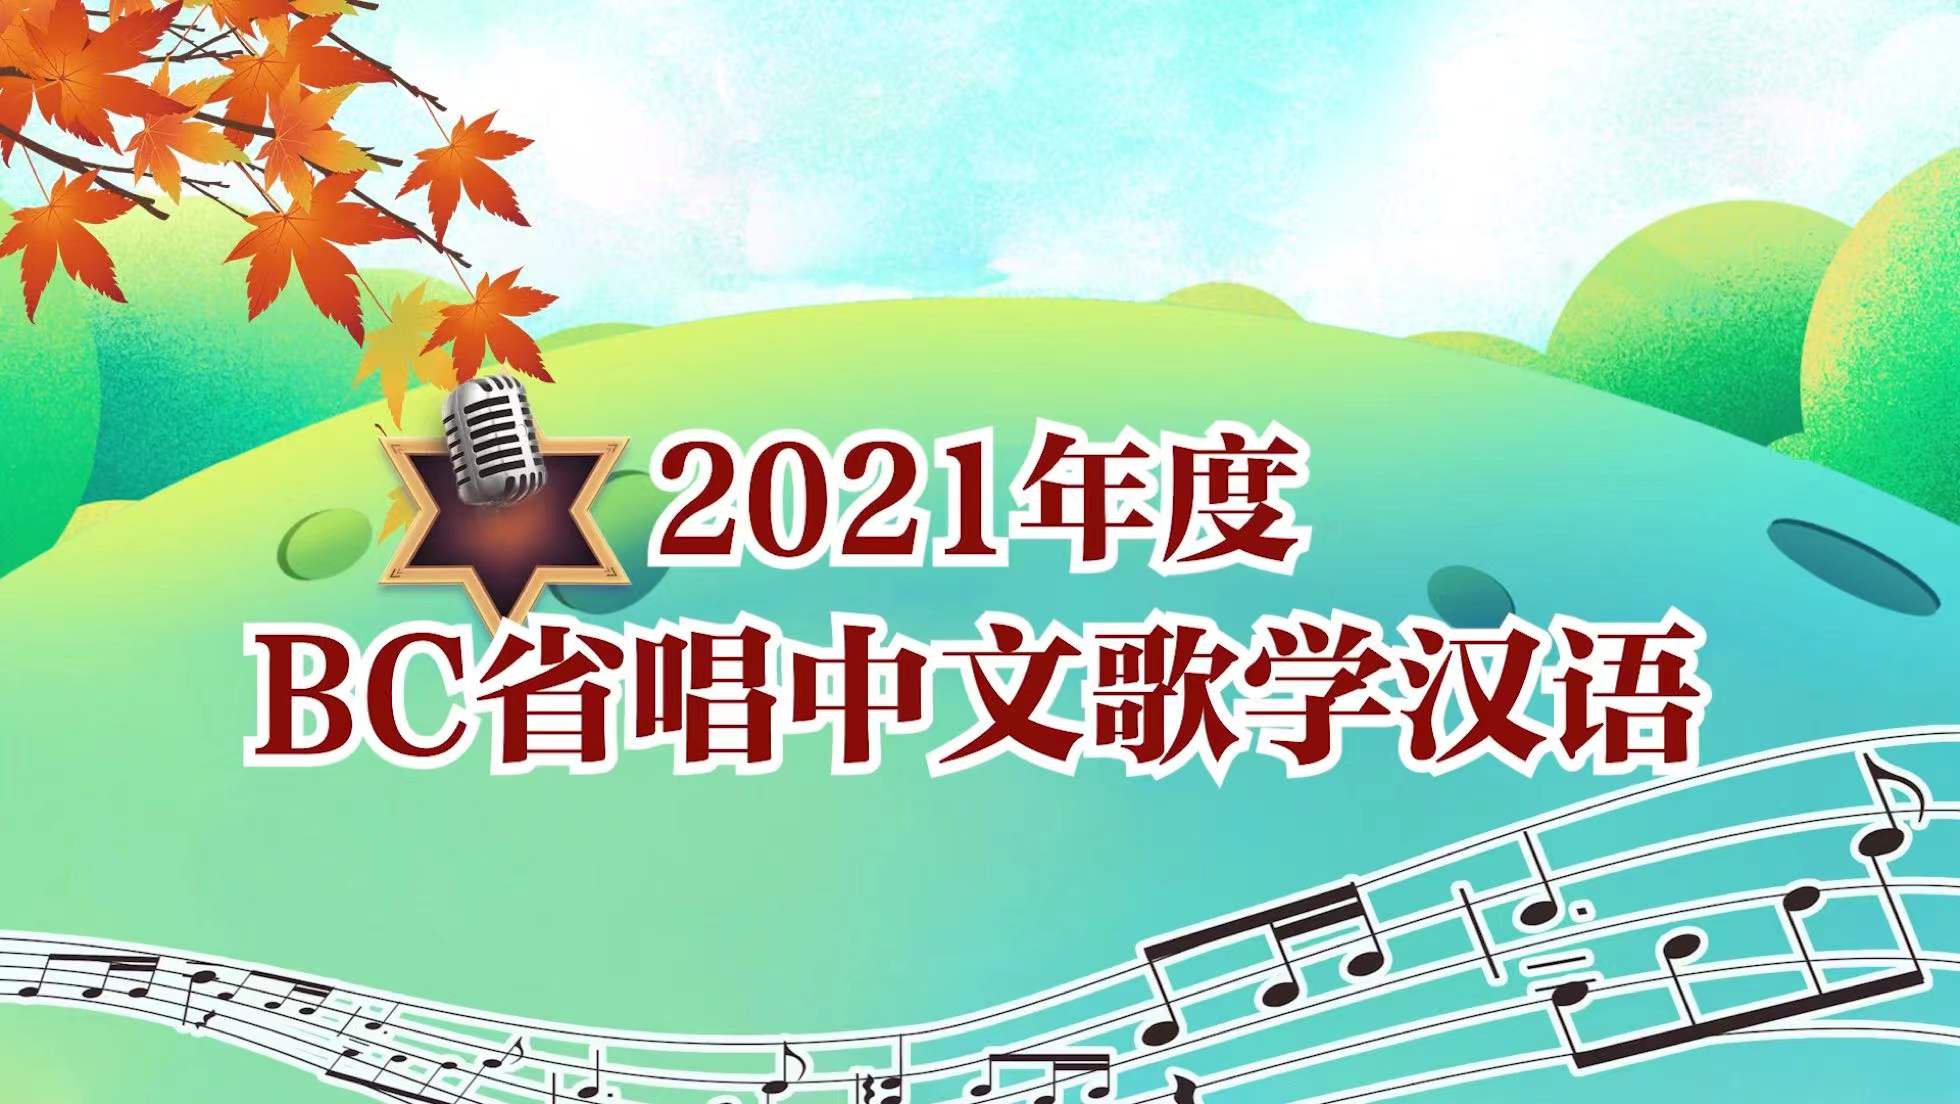 BC省成功举办“唱中文歌 学汉语”歌唱比赛